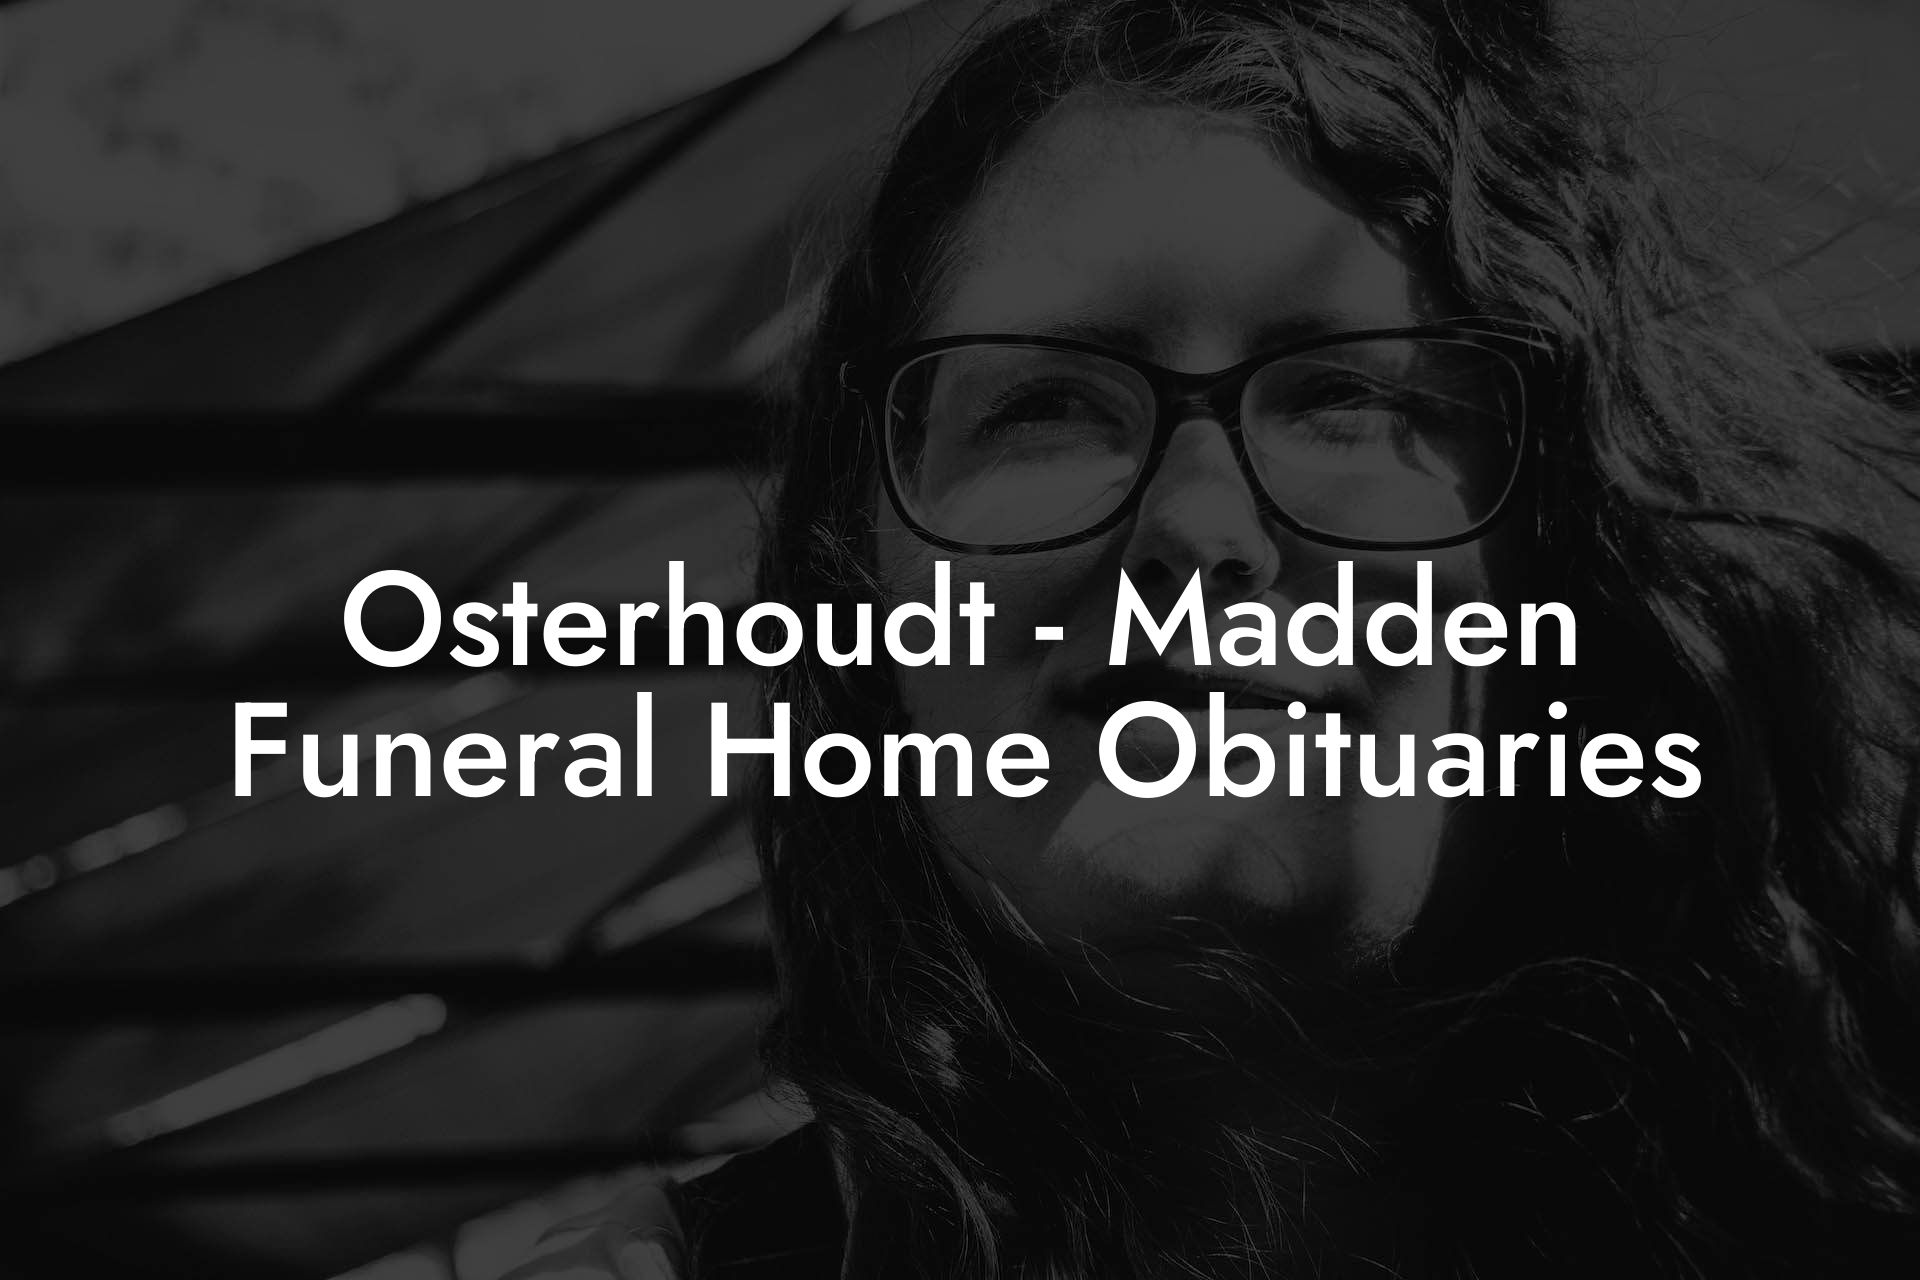 Osterhoudt - Madden Funeral Home Obituaries